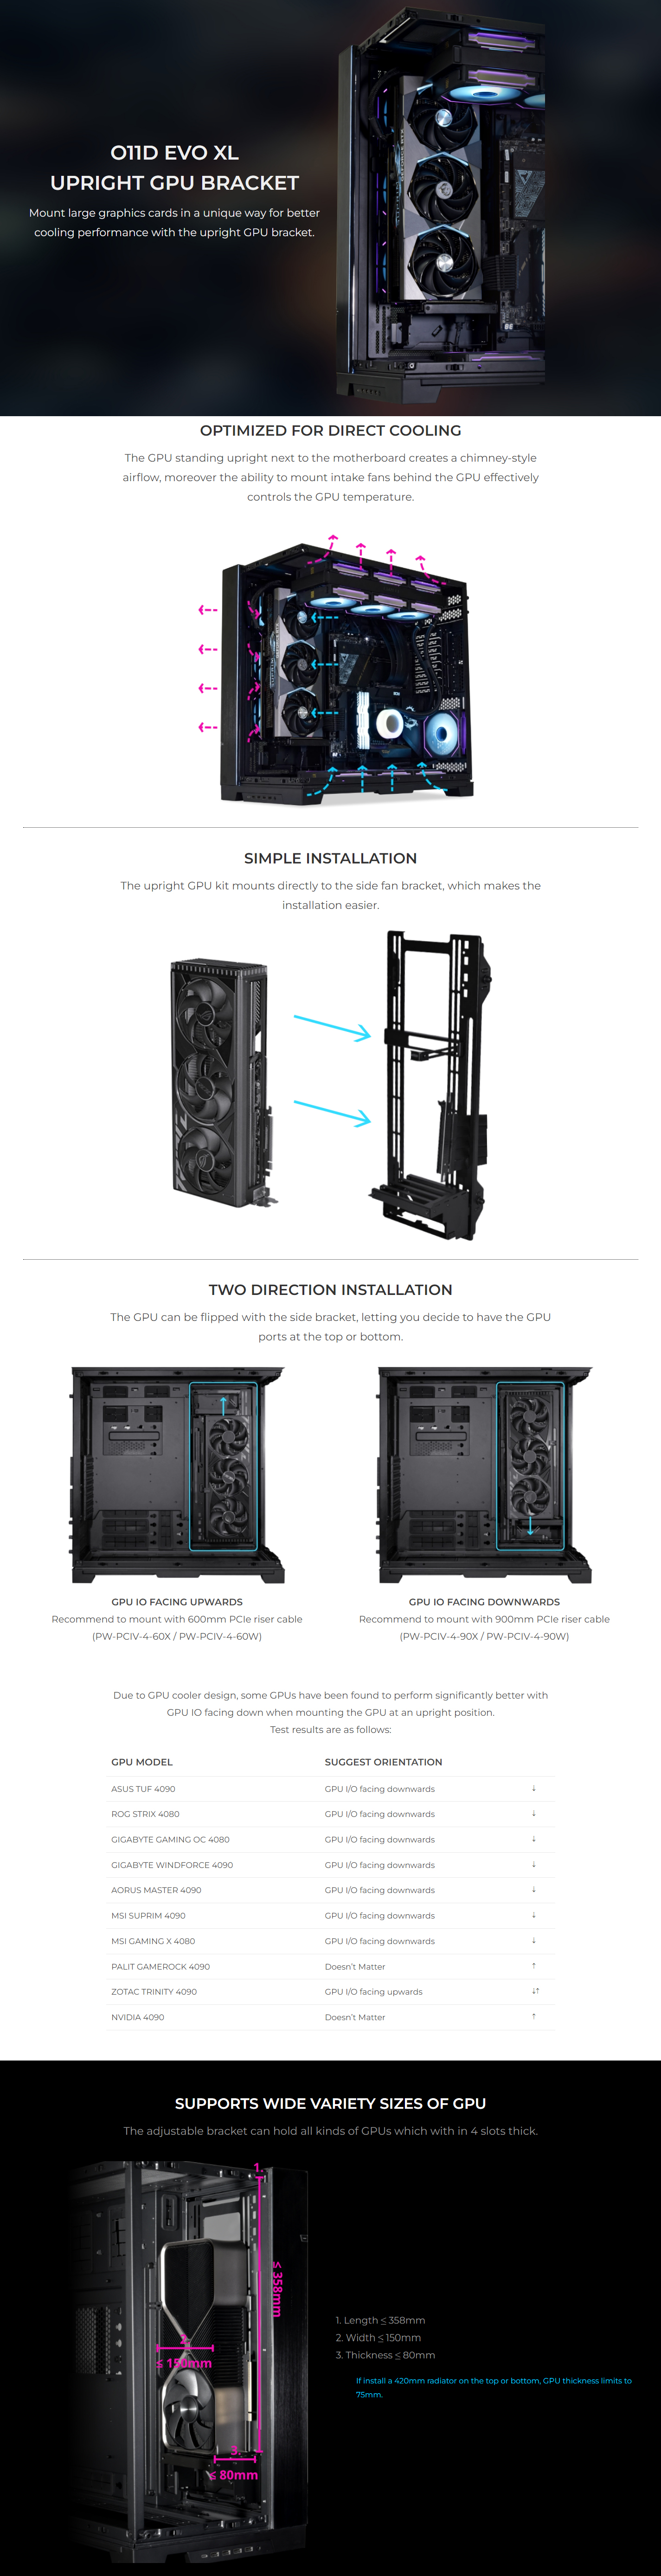 Case-Accessories-Lian-Li-O11D-EVO-XL-Upright-GPU-Bracket-Black-1